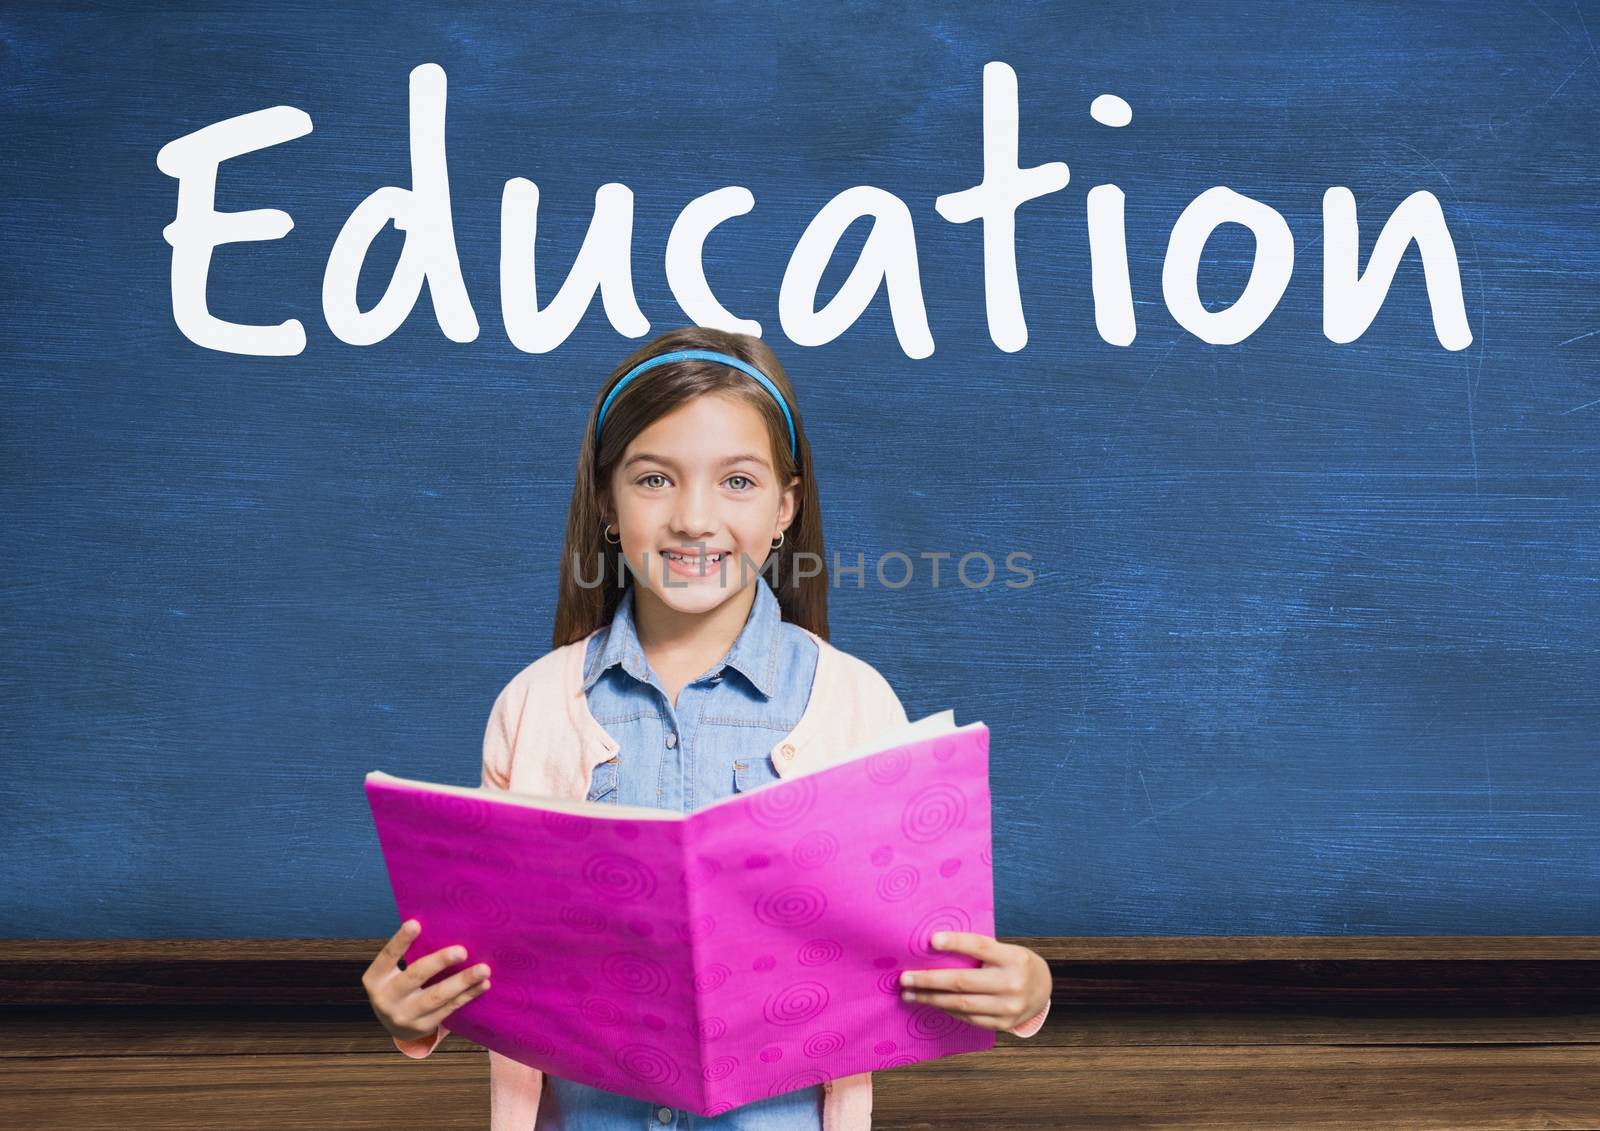 Education text on blackboard with girl reading by Wavebreakmedia